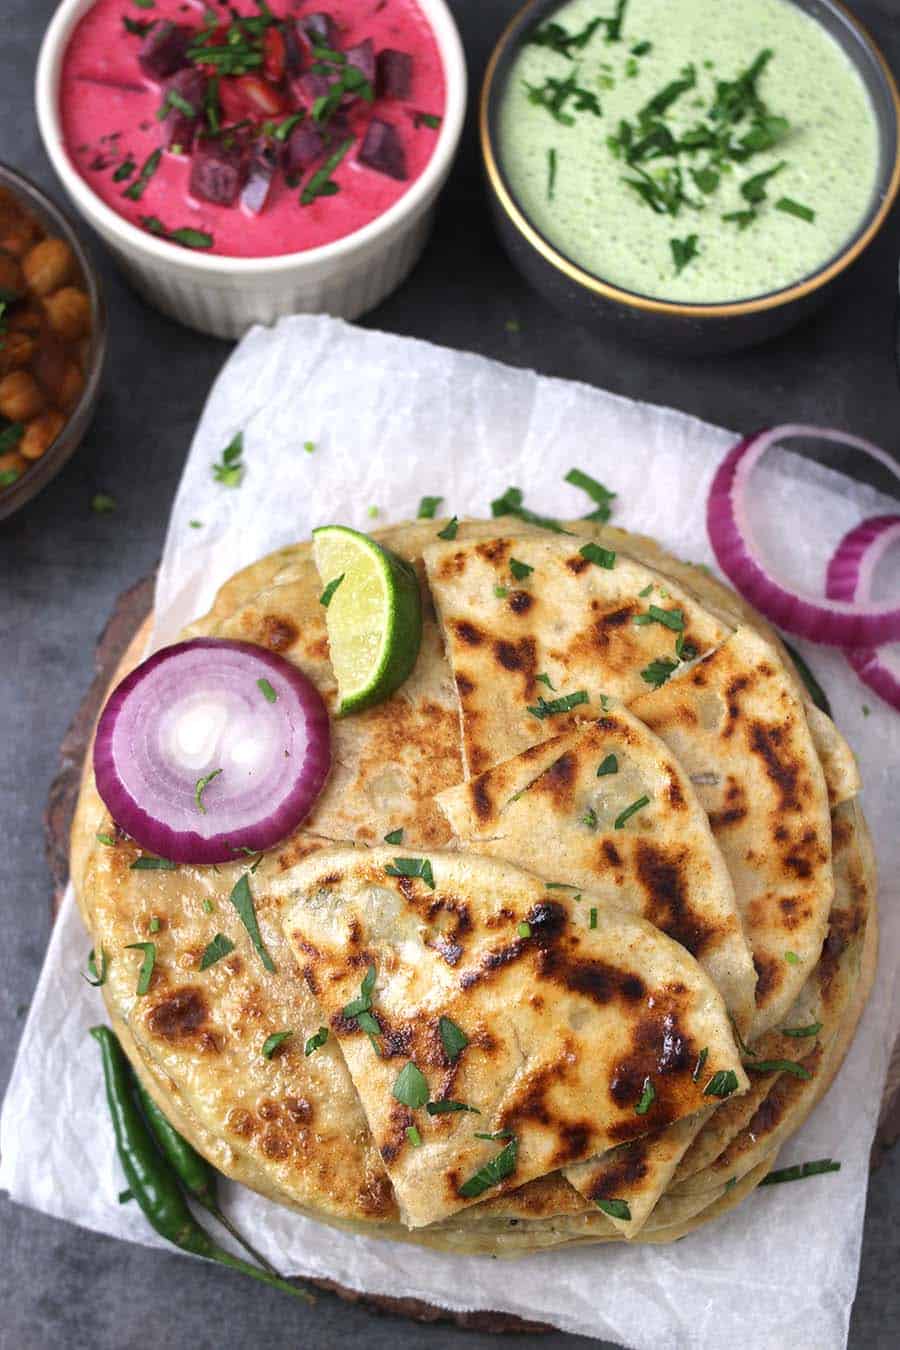 Aloo Paratha, How to make Paratha, Aloo naan, Indian flatbread recipes, vegan and vegetarian breakfast, lunch, dinner recipes, malabar parotta, bread stuffing, dhaba style, restaurant style, punjabi paratha, leftover mashed potato recipes, no yeast flatbread, #naan #roti #paratha, farata 